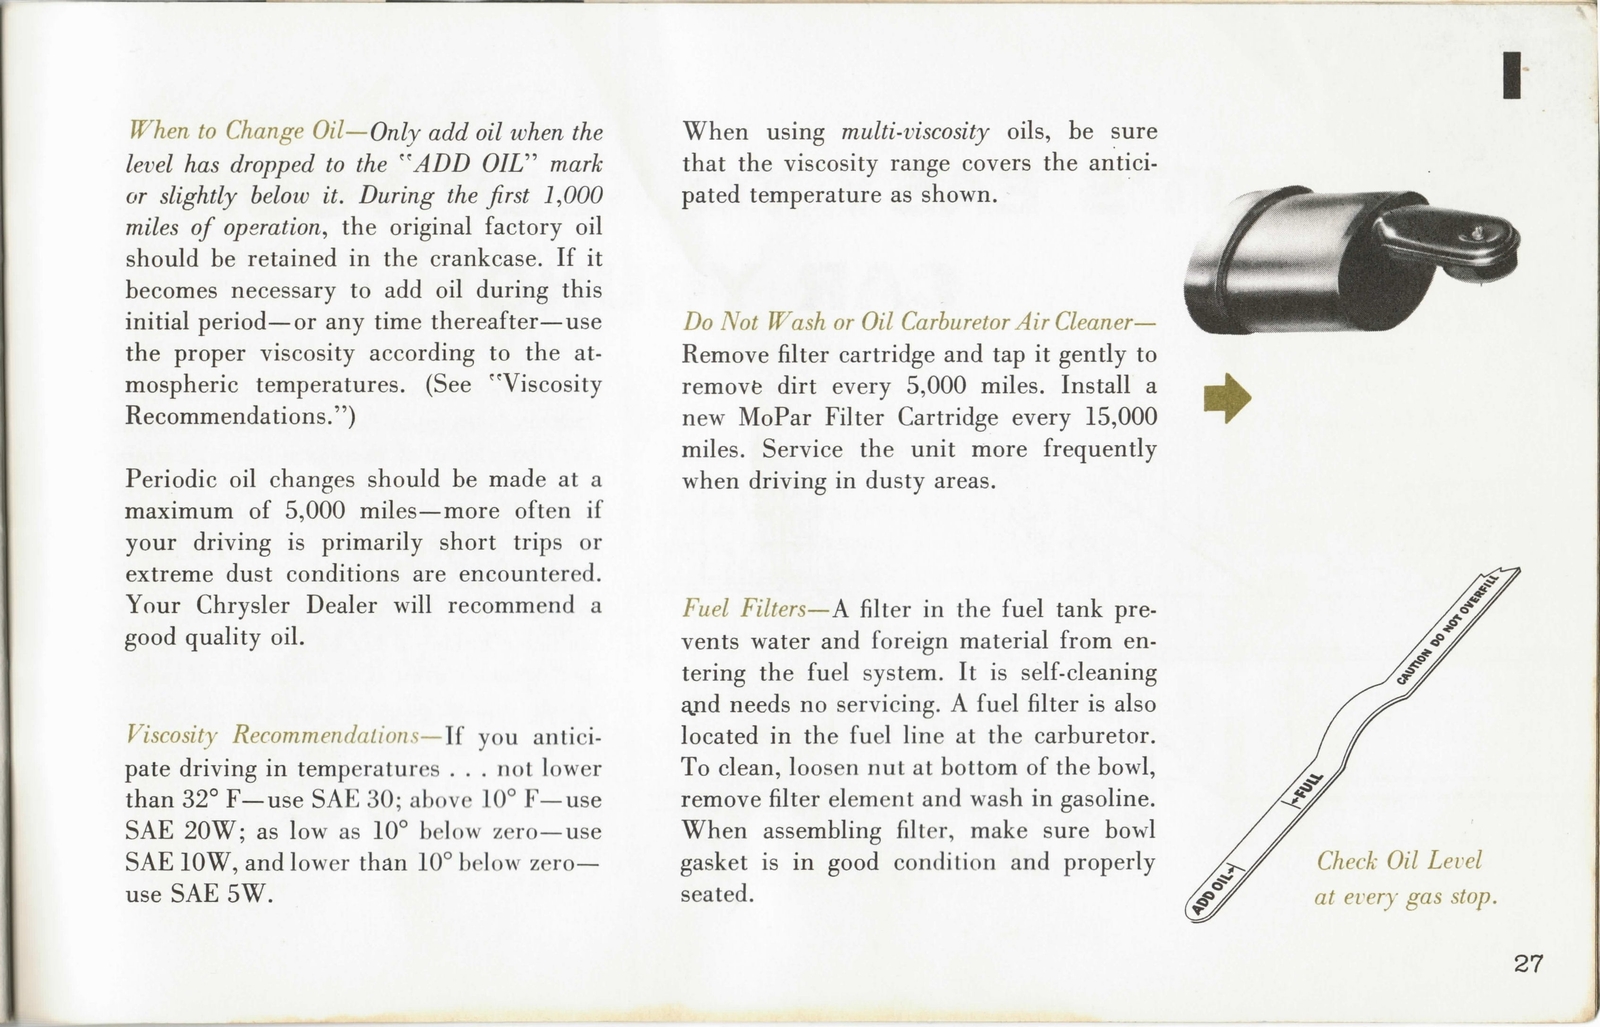 n_1957 Chrysler Manual-27.jpg